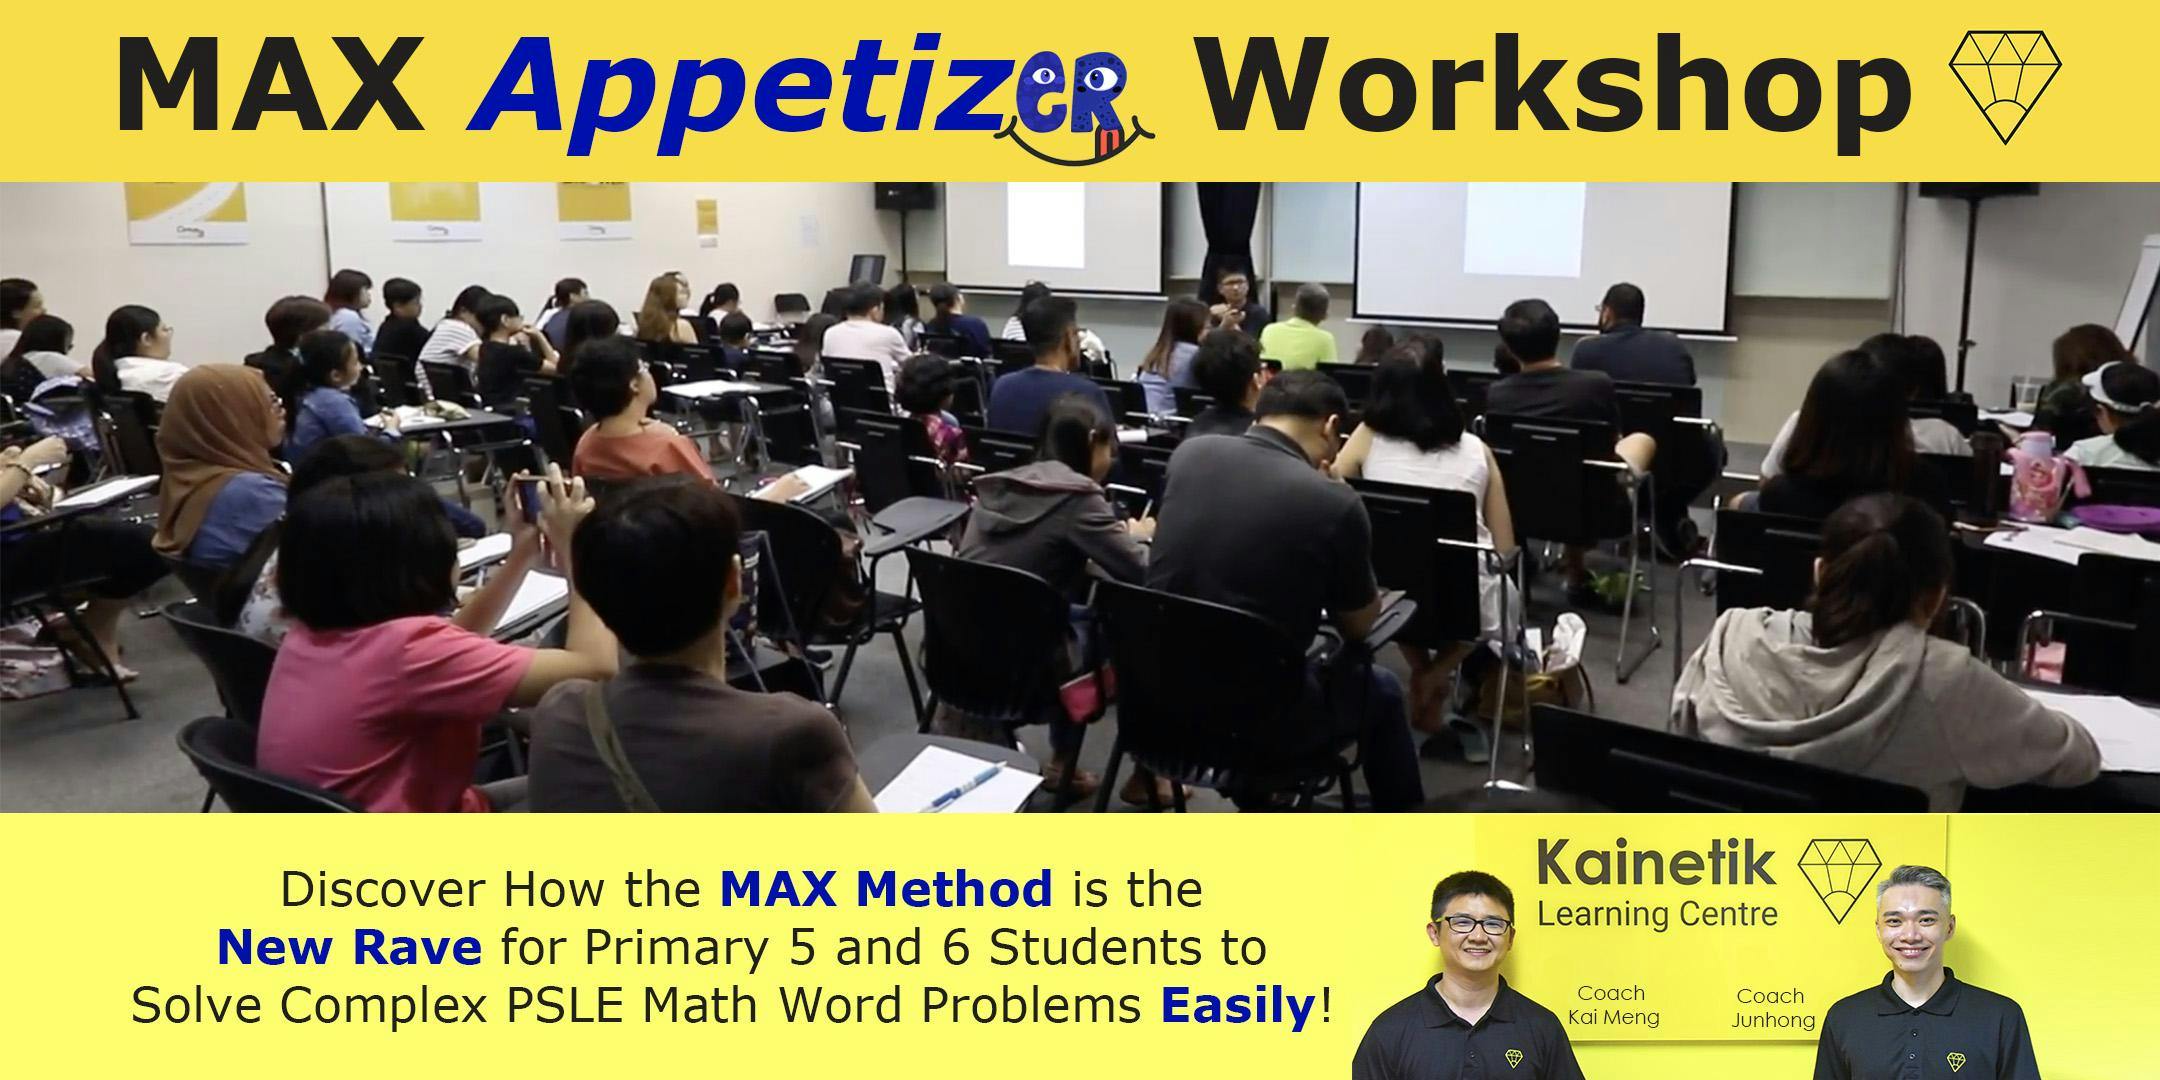 MAX Appetizer Workshop (MAW) 2019